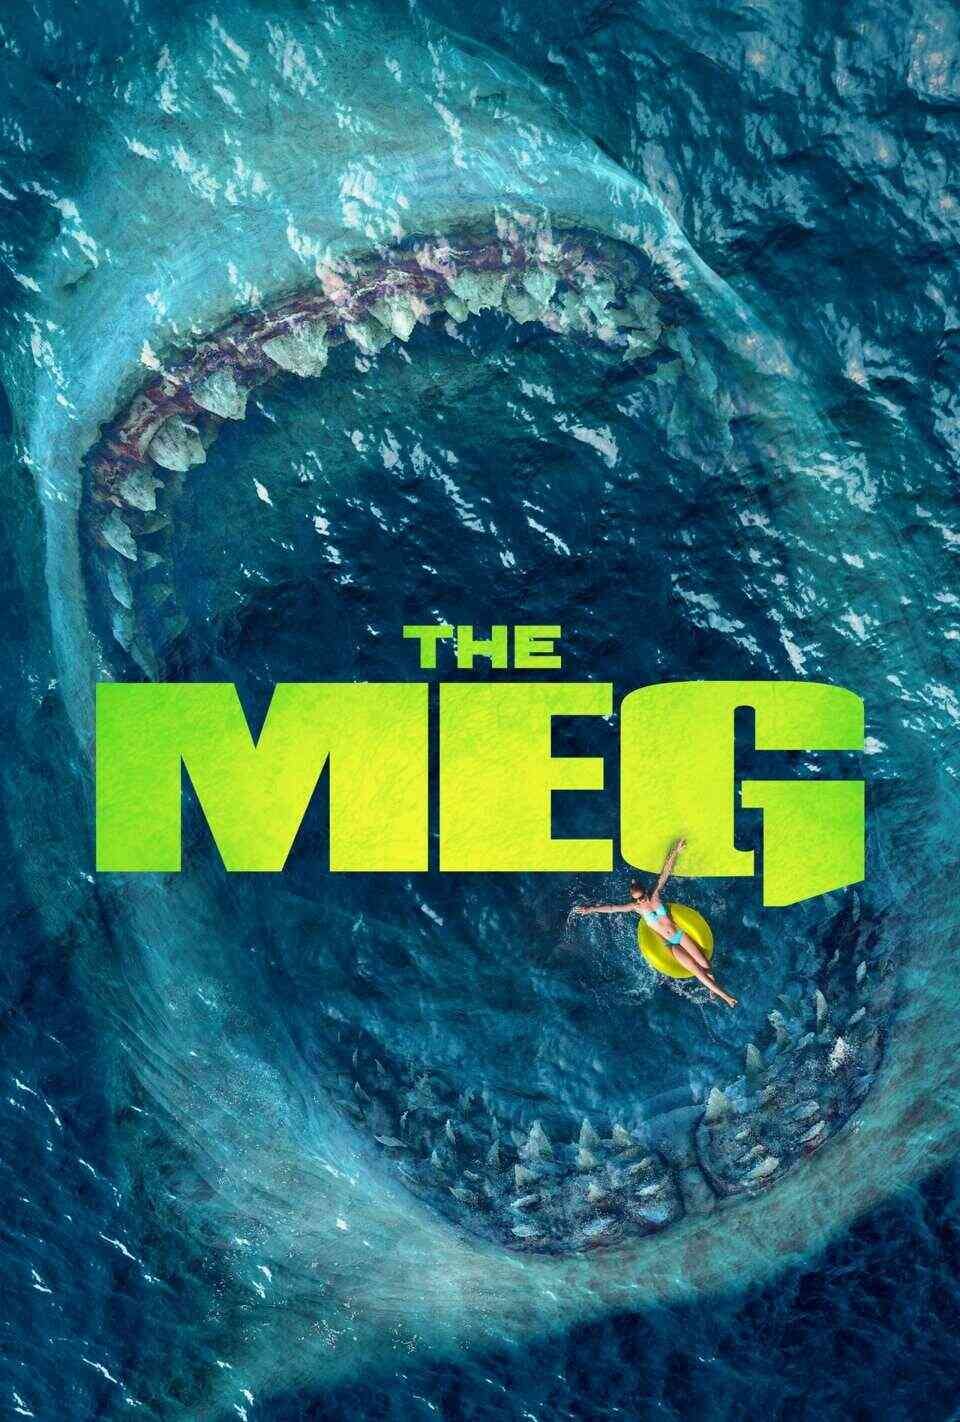 Read The Meg screenplay (poster)